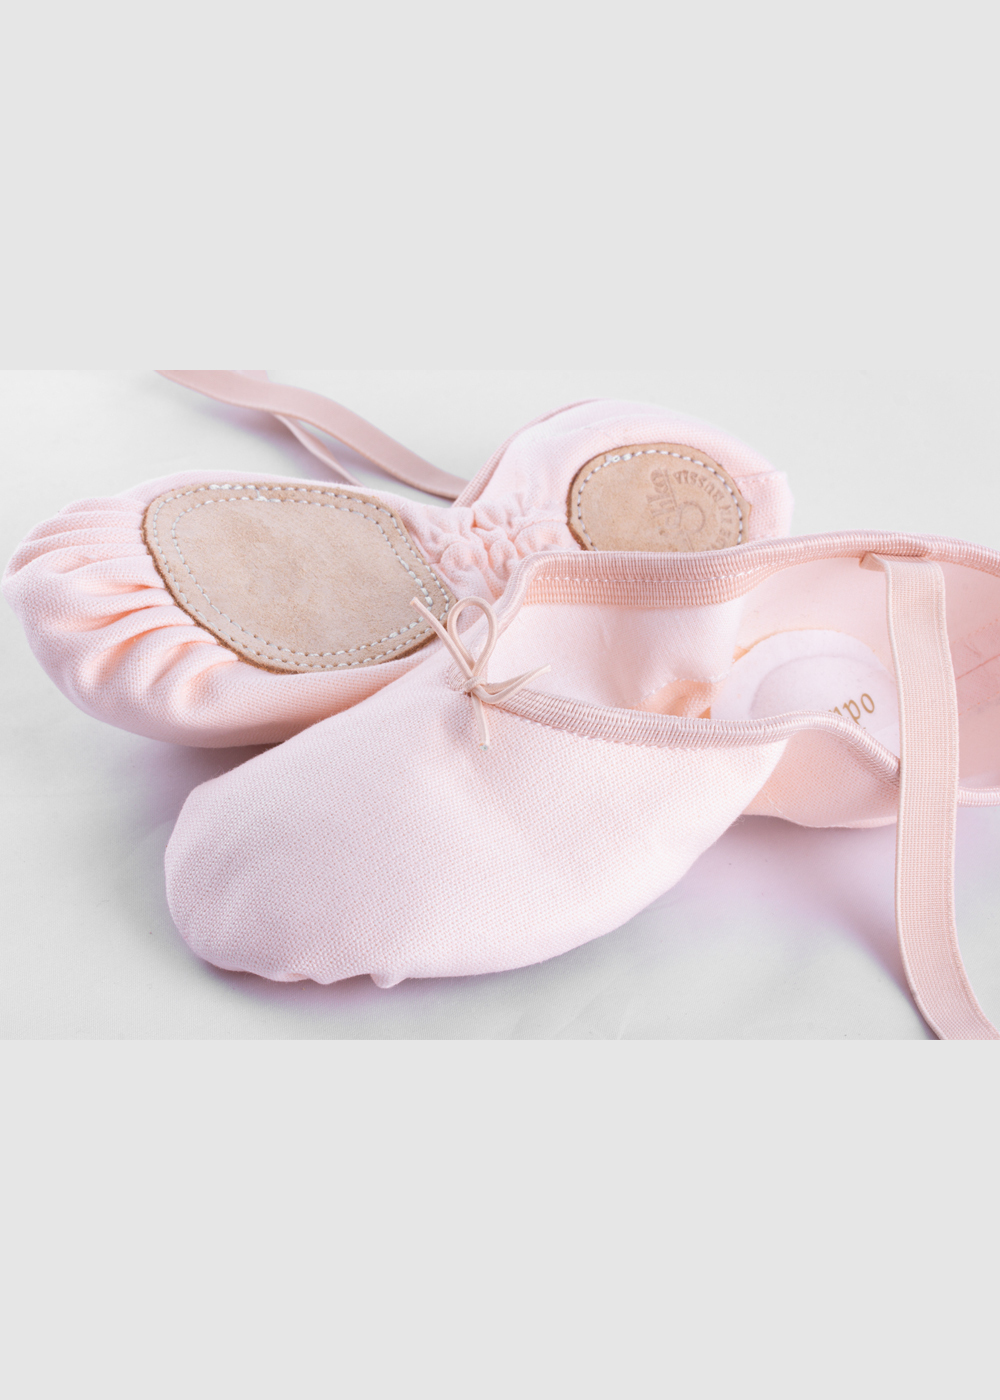 Grishko Tempo Canvas Ballet Shoes Adult 39; Width C; Light Pink